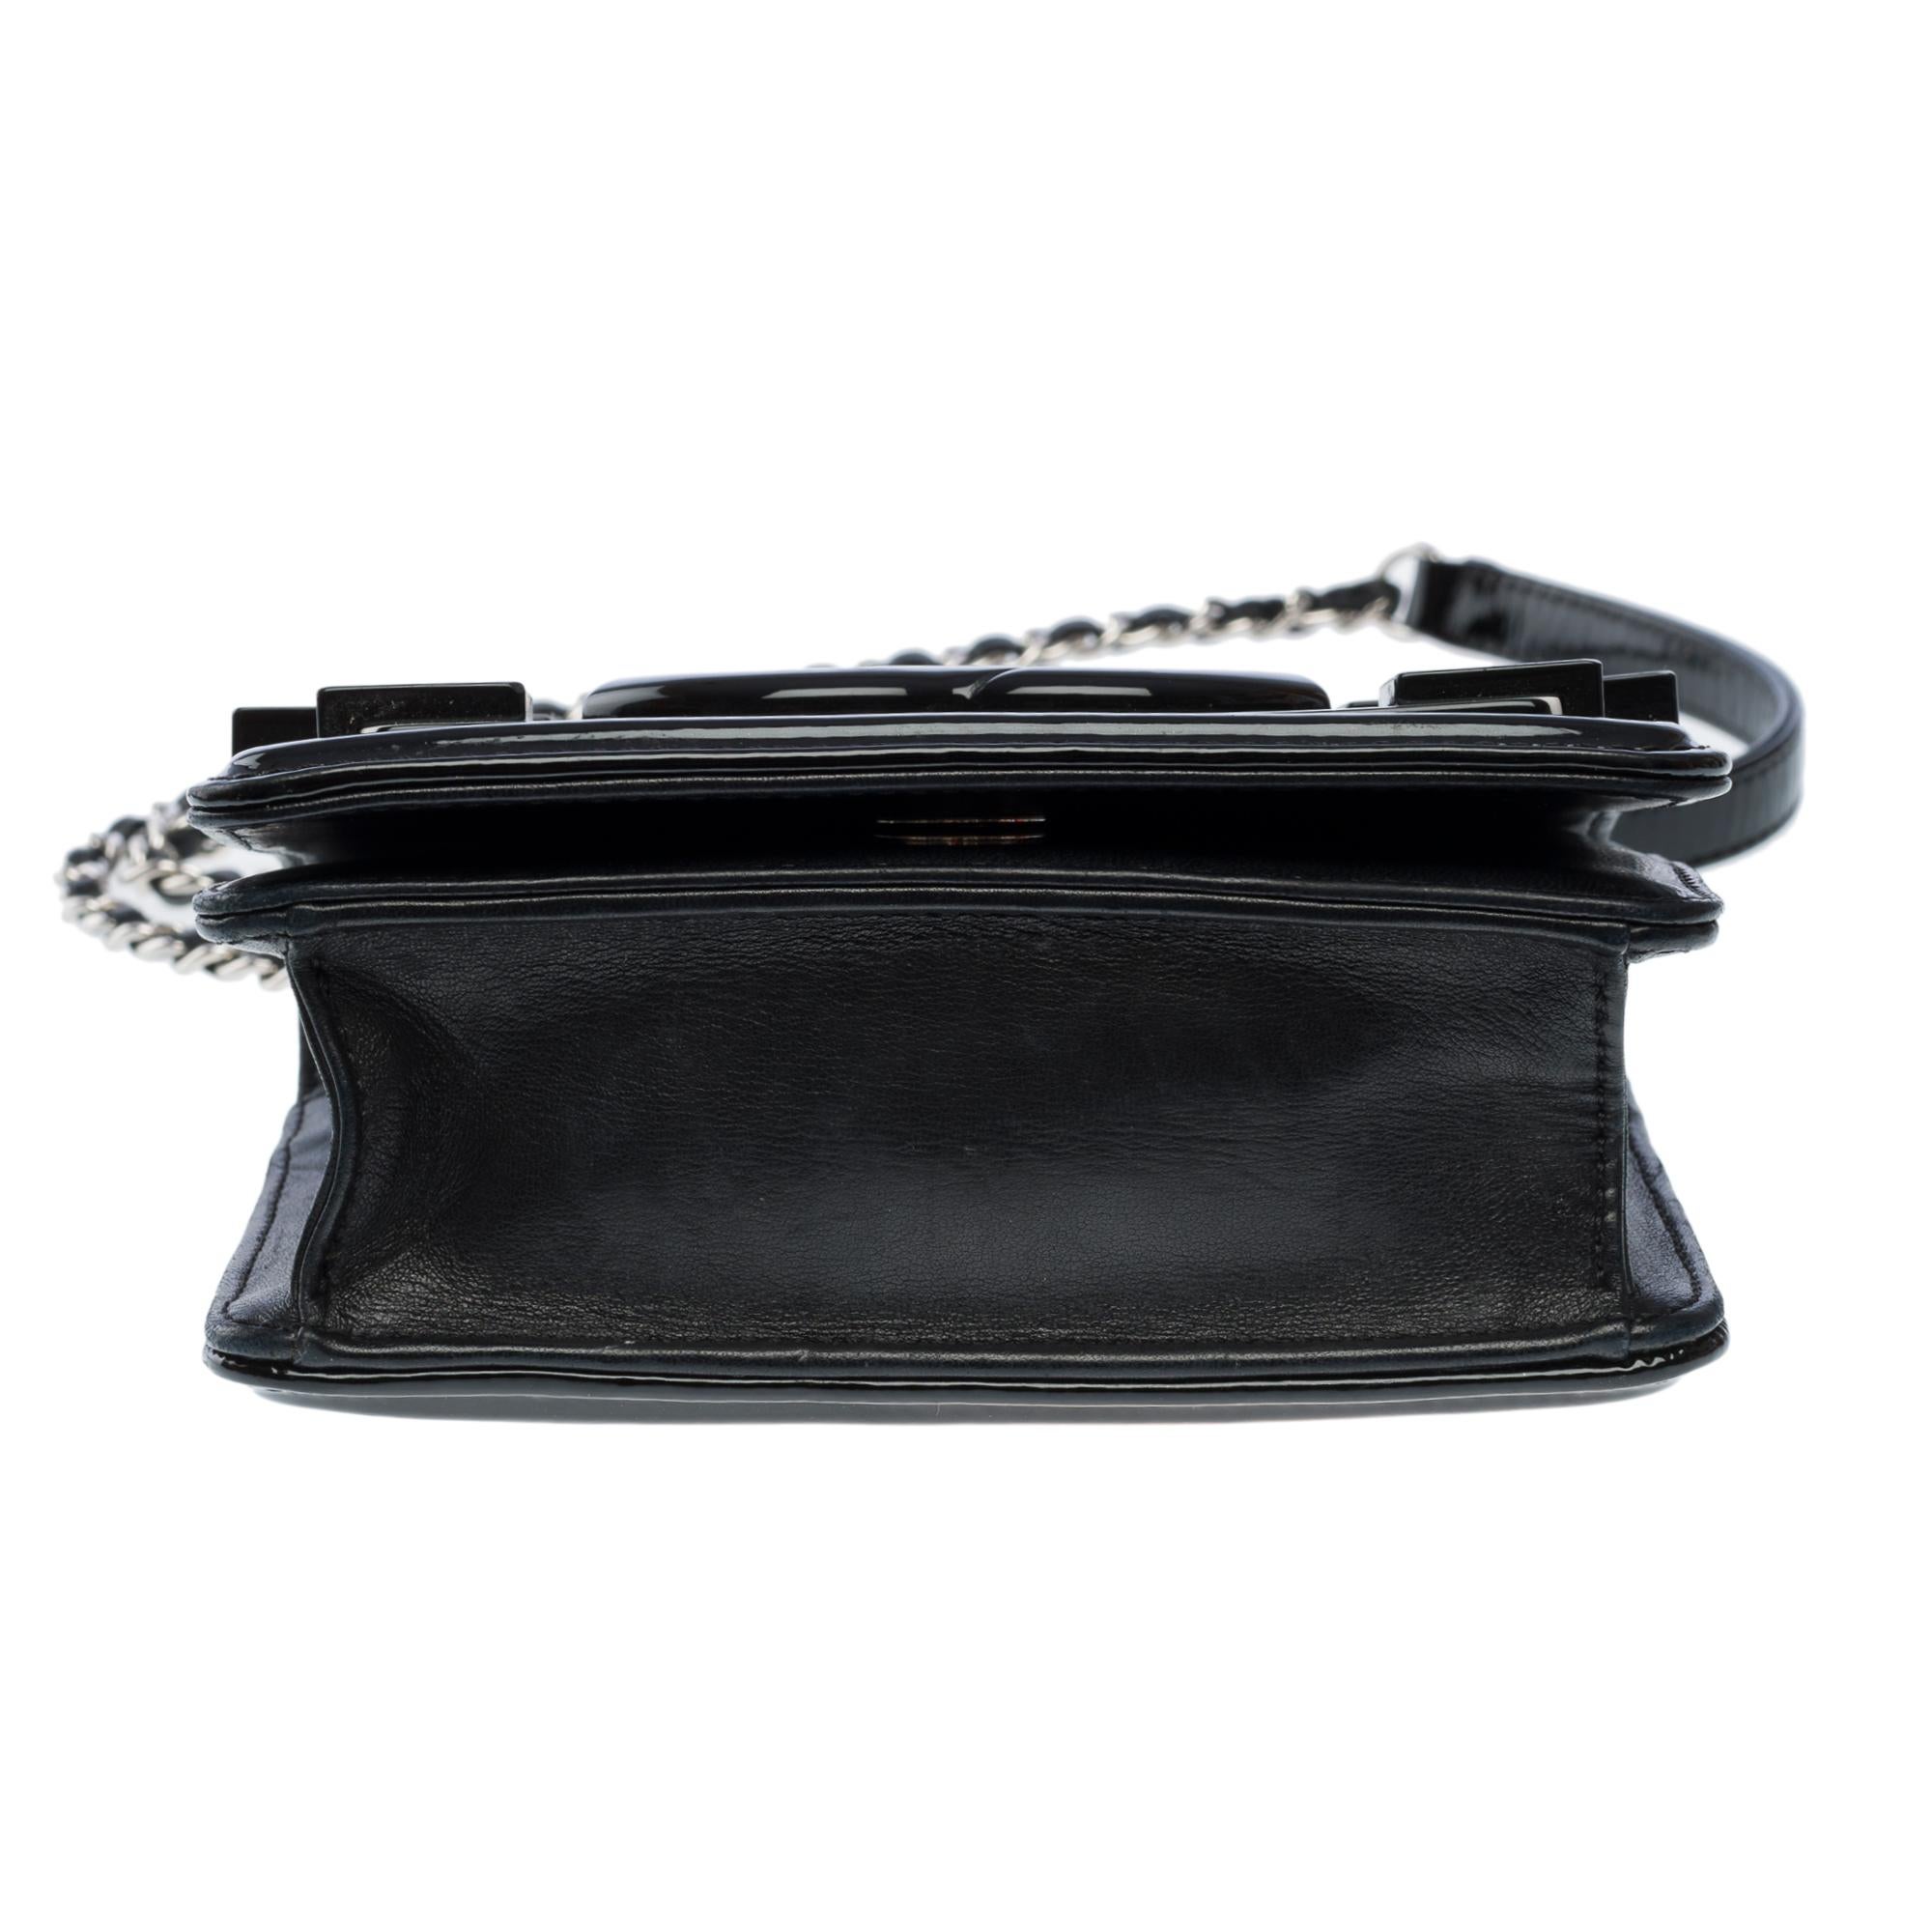 Limited edition Chanel Mini Lego Brick shoulder flap bag in Black leather, SHW For Sale 7